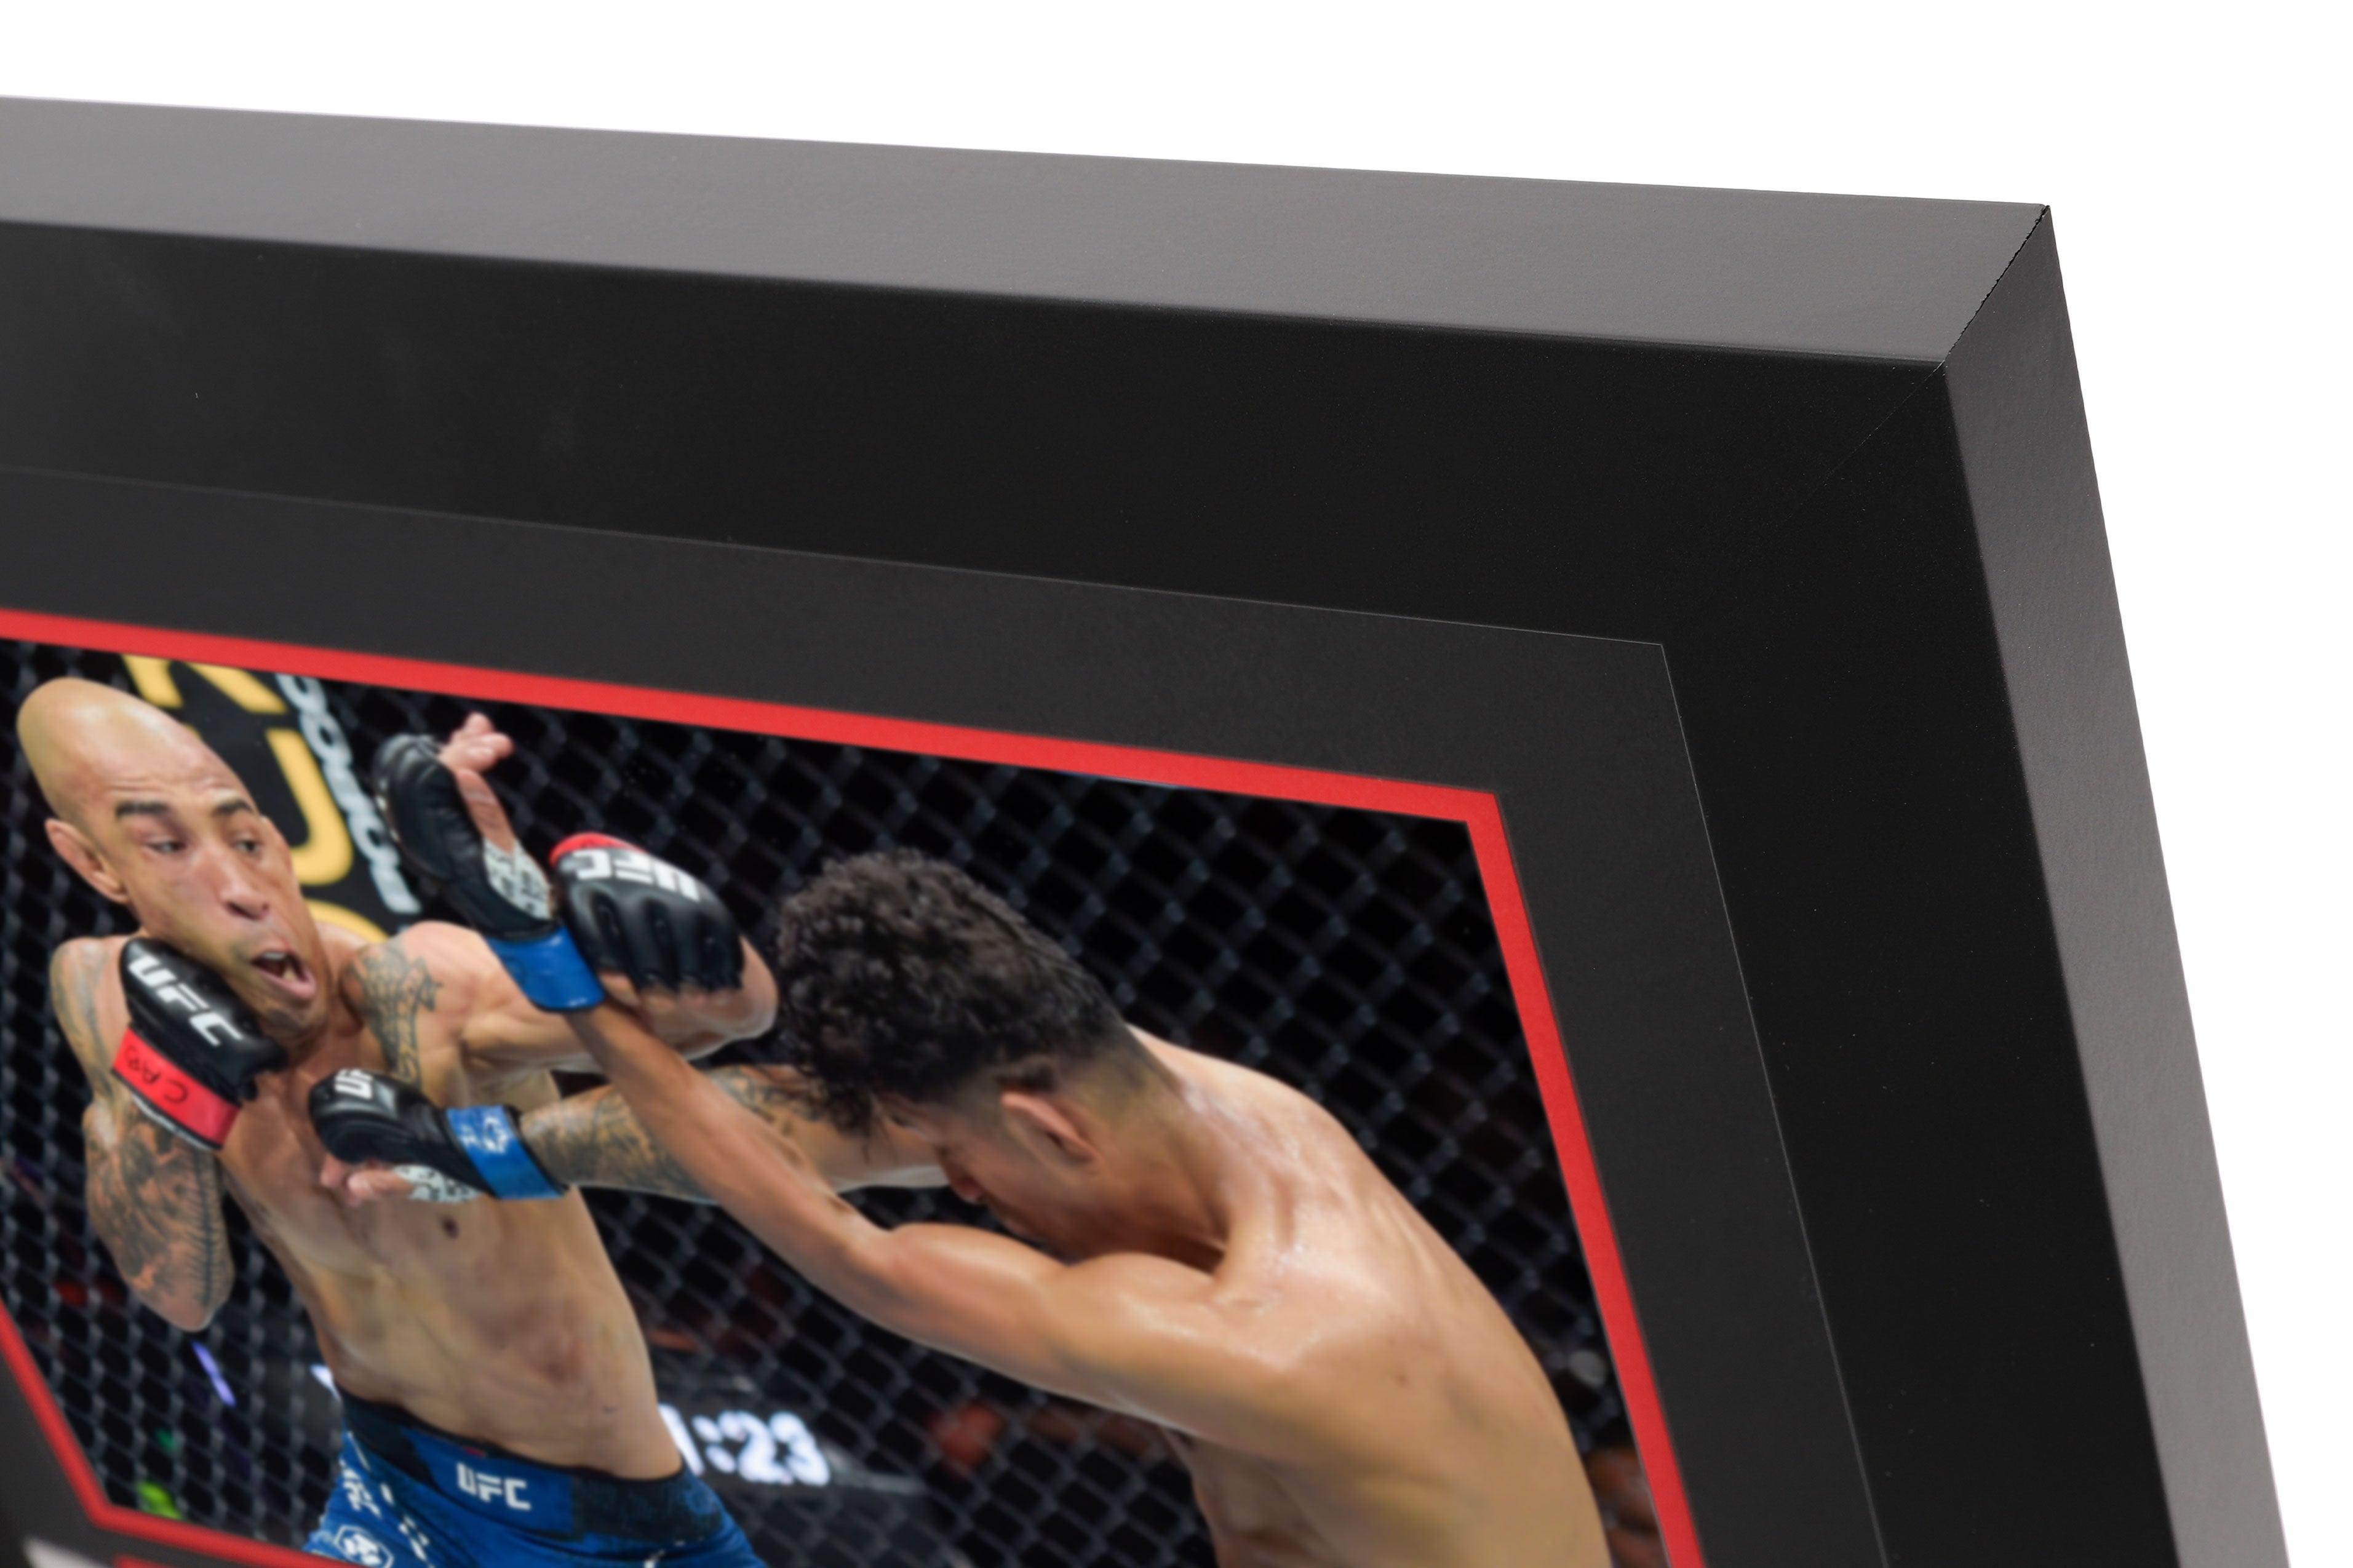 UFC 301: Martinez vs Aldo Canvas & Photo